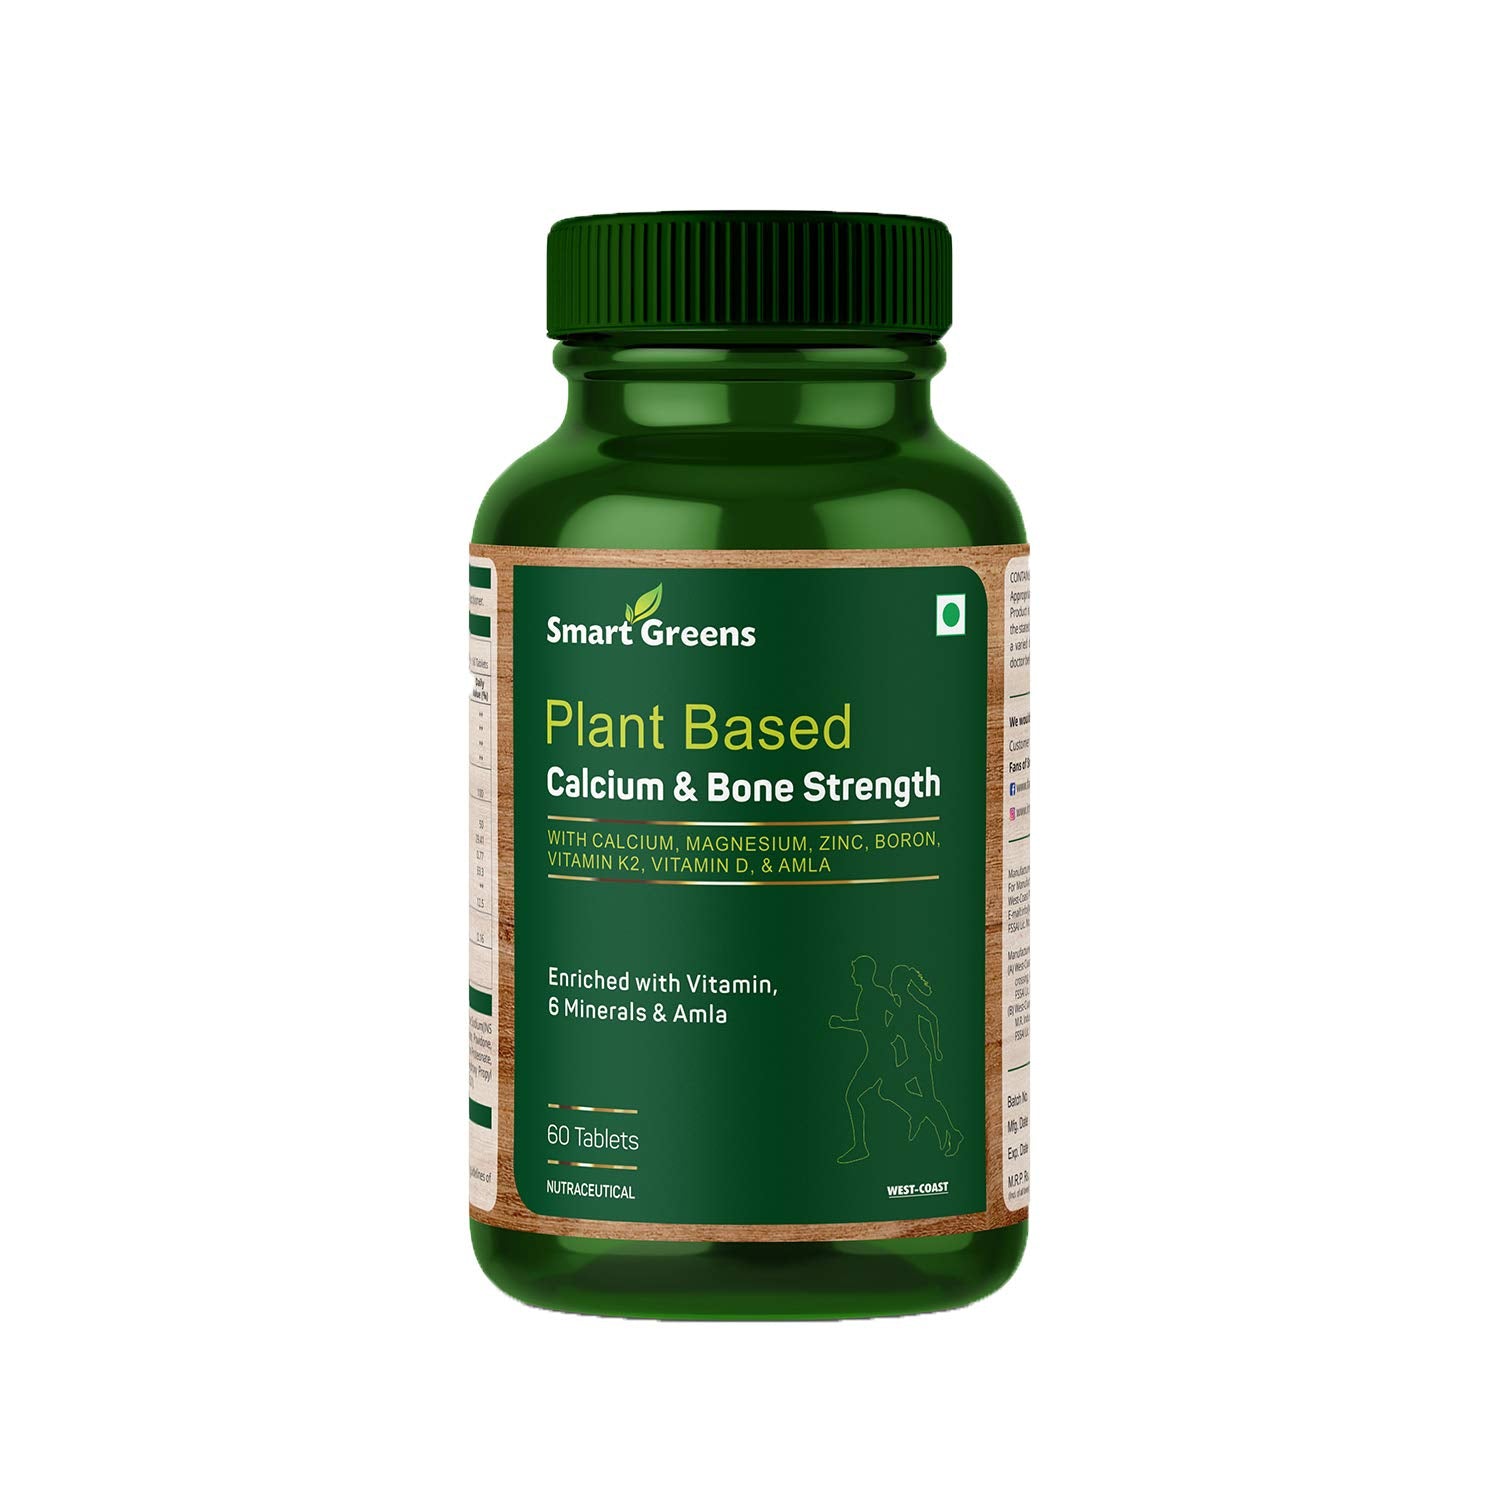 Smart Greens Plant Based Calcium & Bone Strength with Calcium, Magnesium, Zinc, Boron, Vitamin K2, Vitamin D & Amla – 60 Tablets